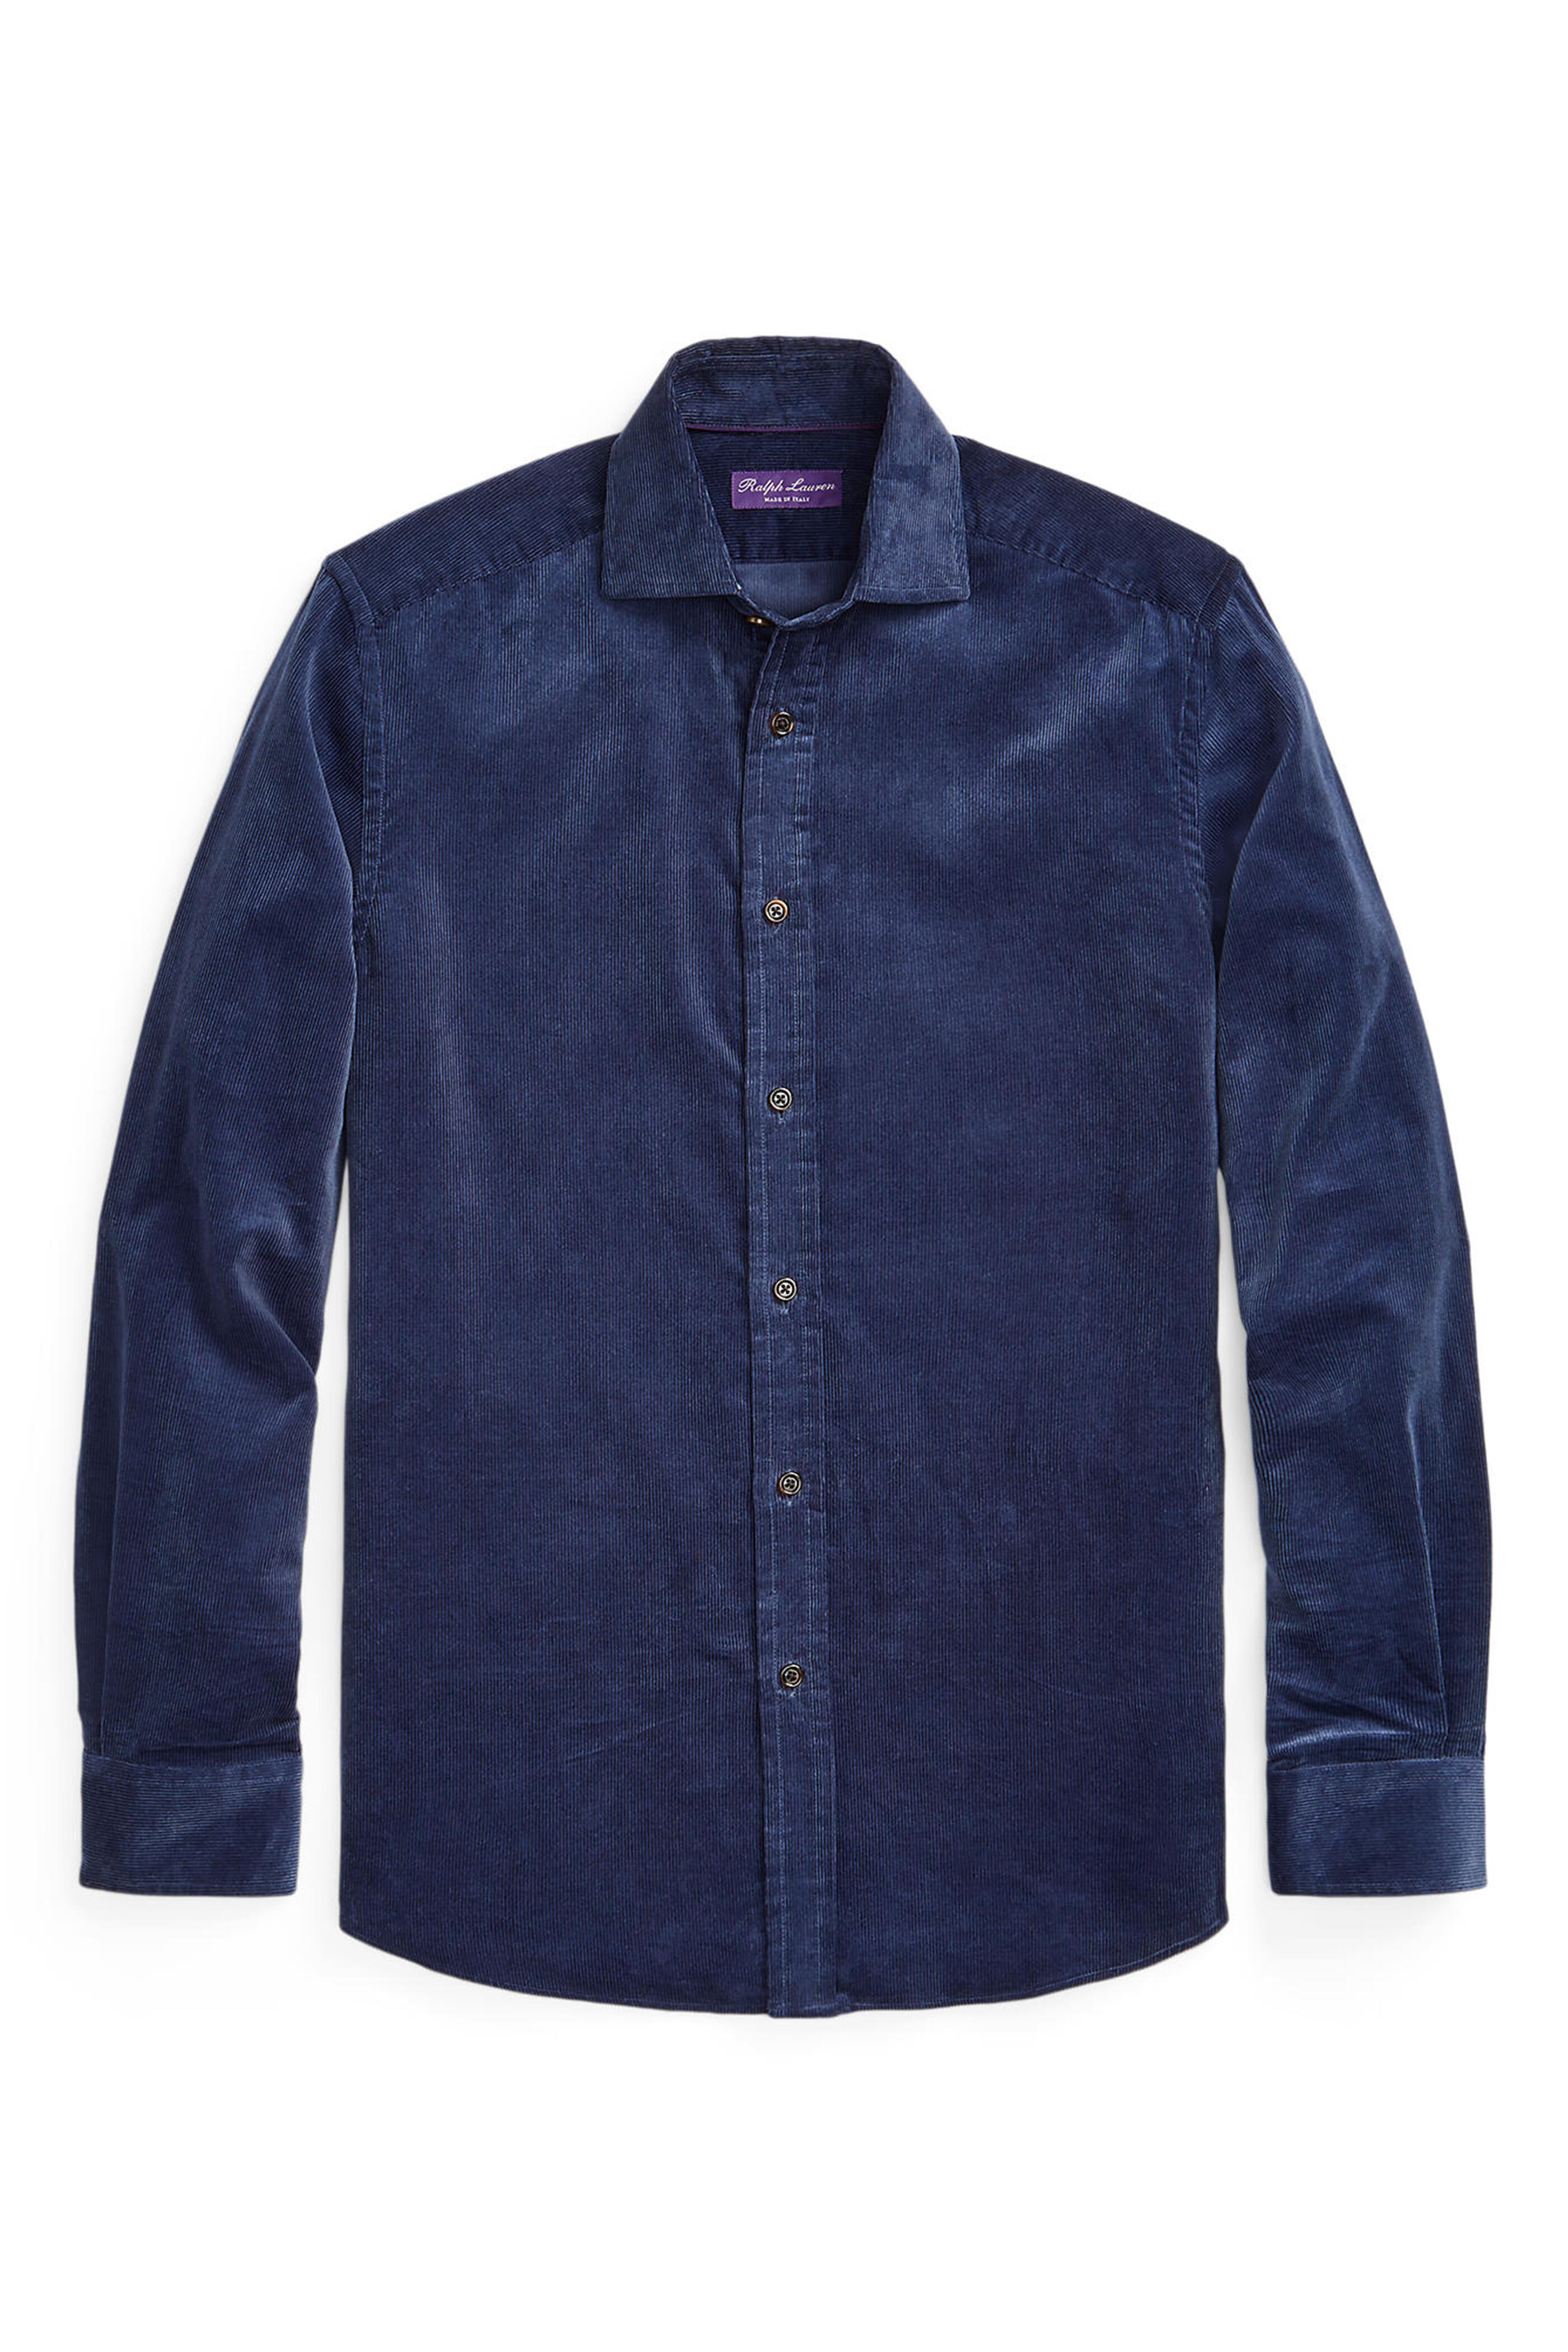 Ralph Lauren Purple Label - Blue Fine-Wale Corduroy Shirt